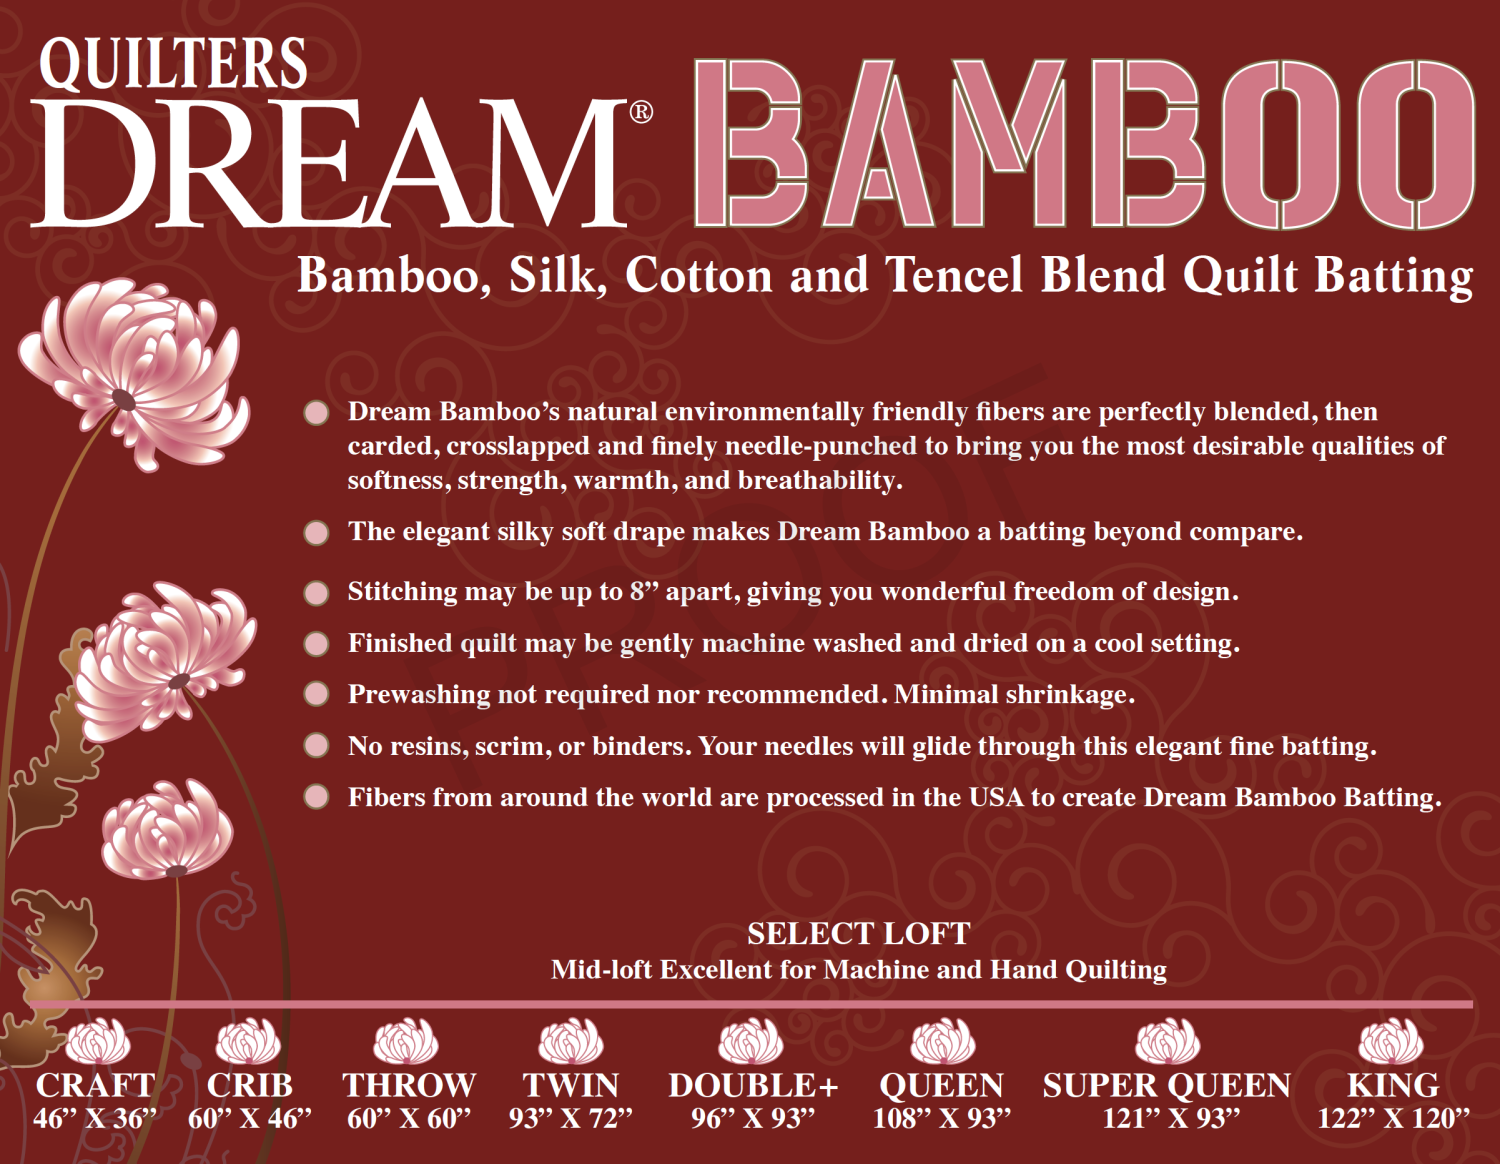 Bamboo Craft 46 x 36 - OCF - Quilters Dream